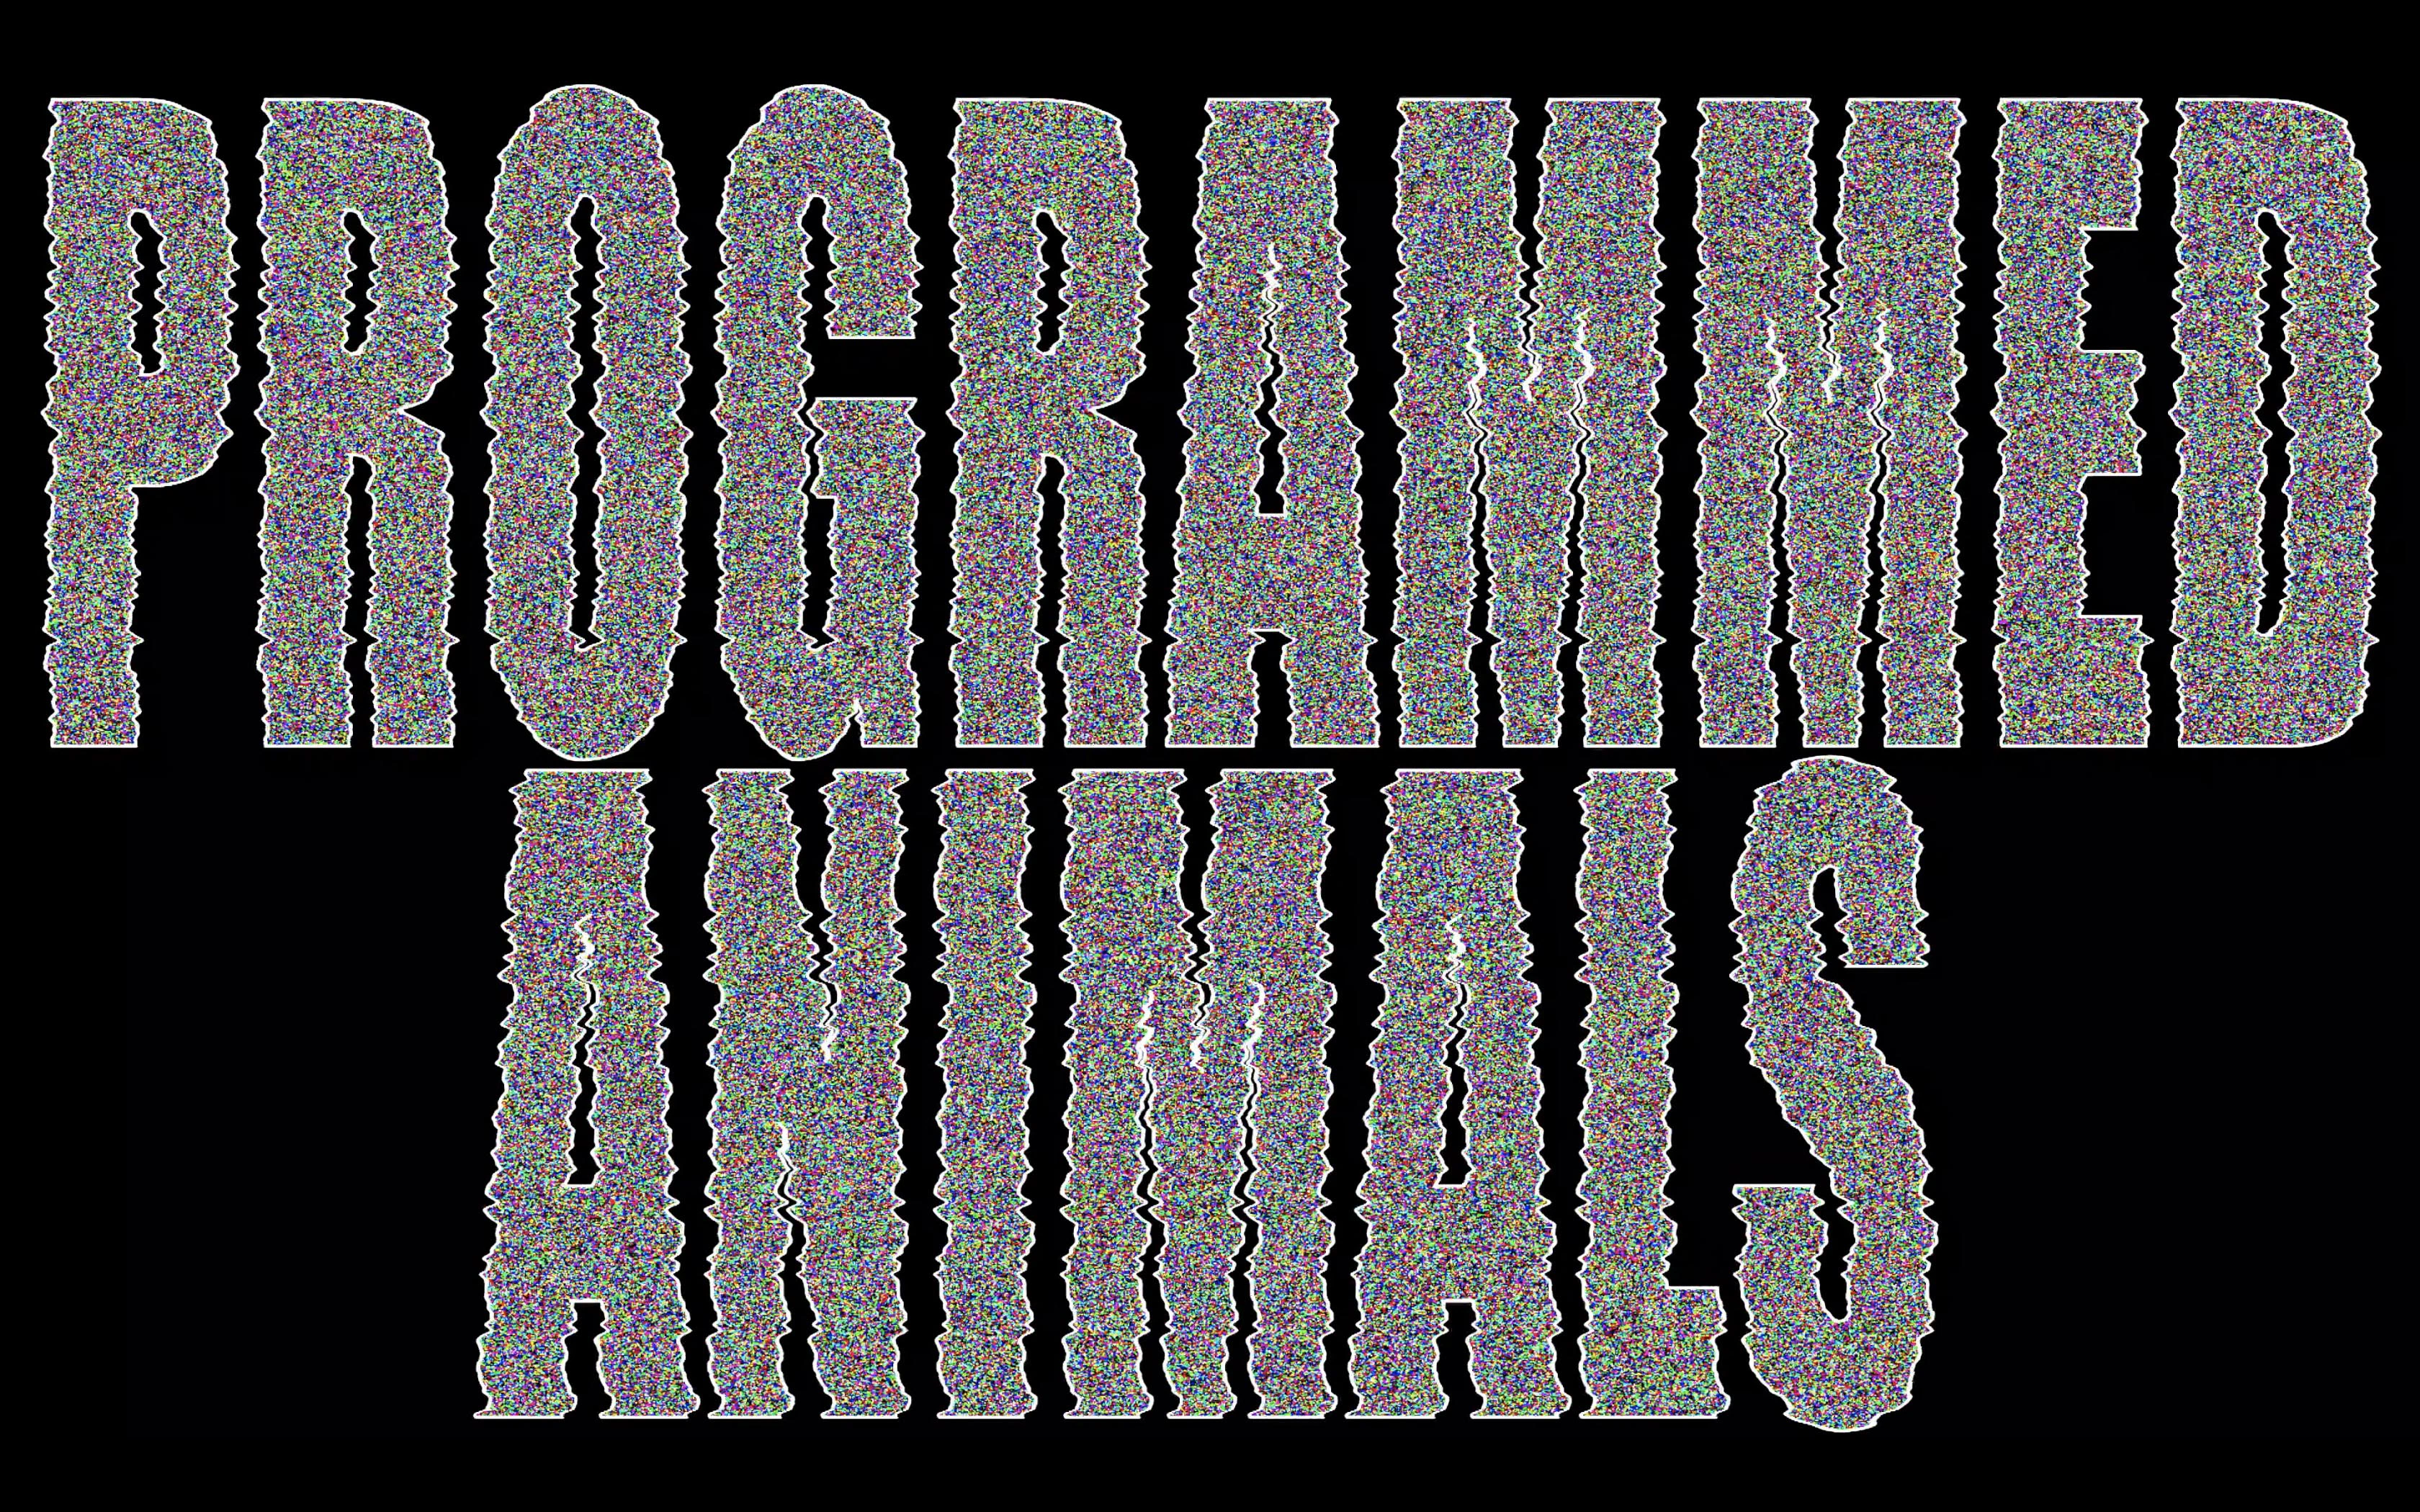 Programmed Animals